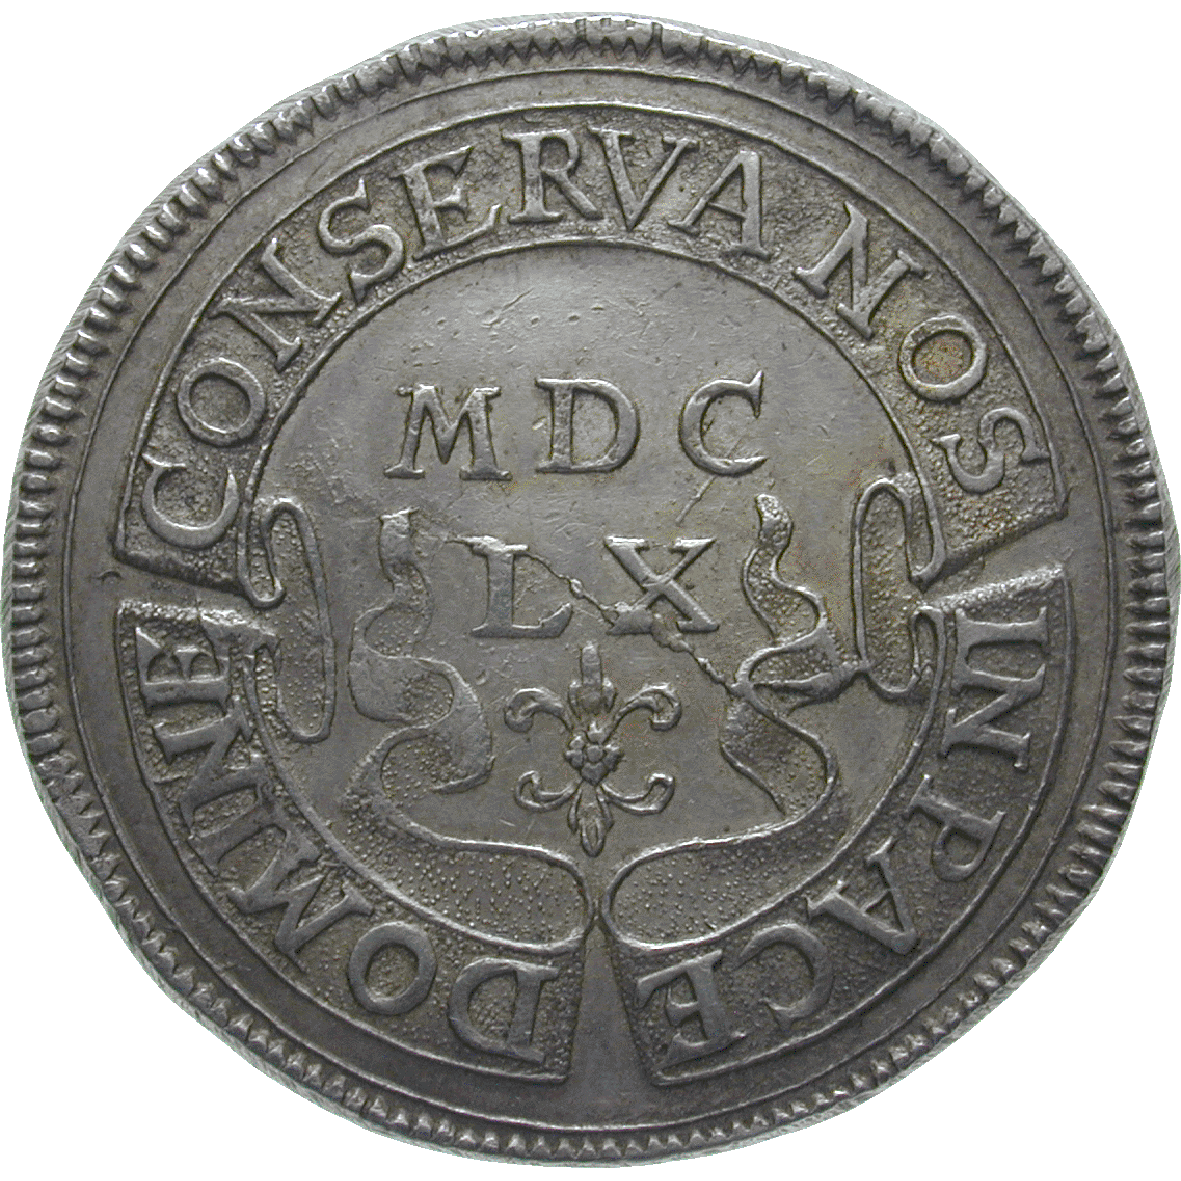 Republic of Zurich, Taler (Waser Taler) 1660 (reverse)